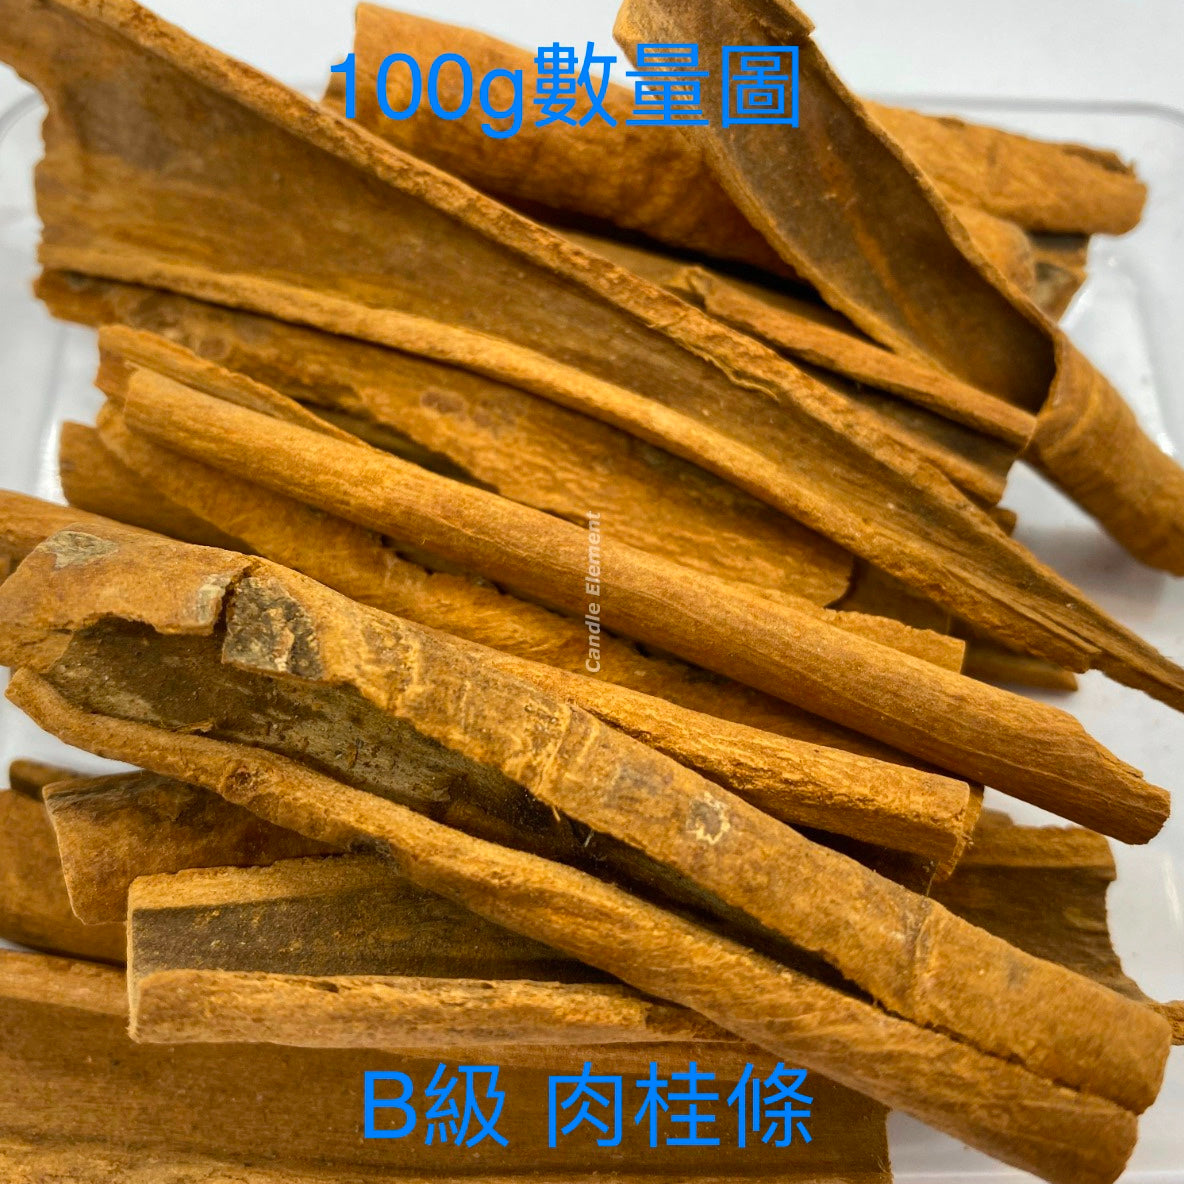 Cinnamon sticks 肉桂條